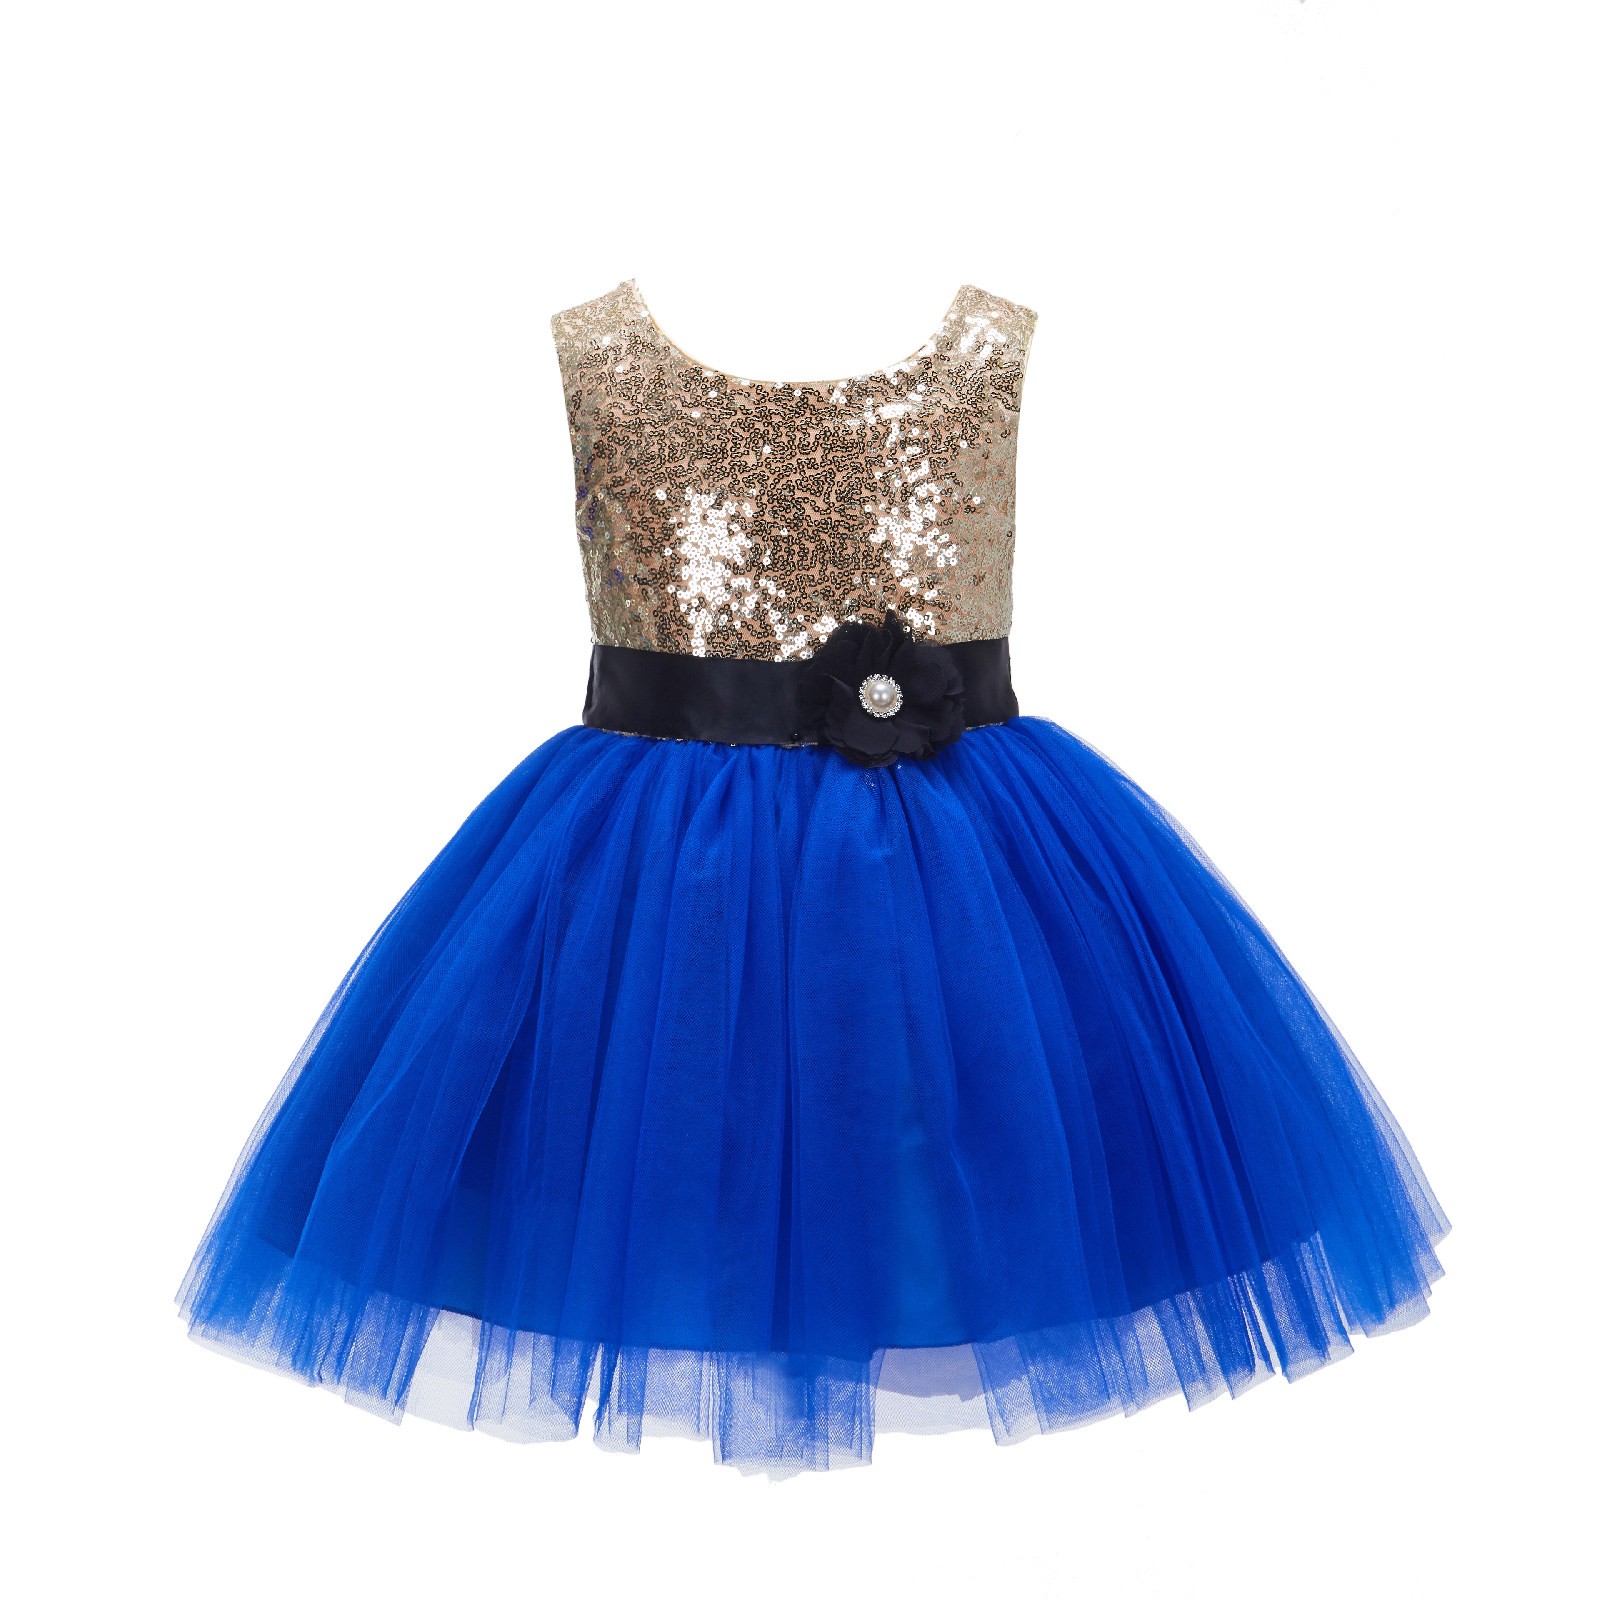 Gold/Royal Blue/Black Glitter Sequin Tulle Flower Girl Dress Party Ball Gown 123RF